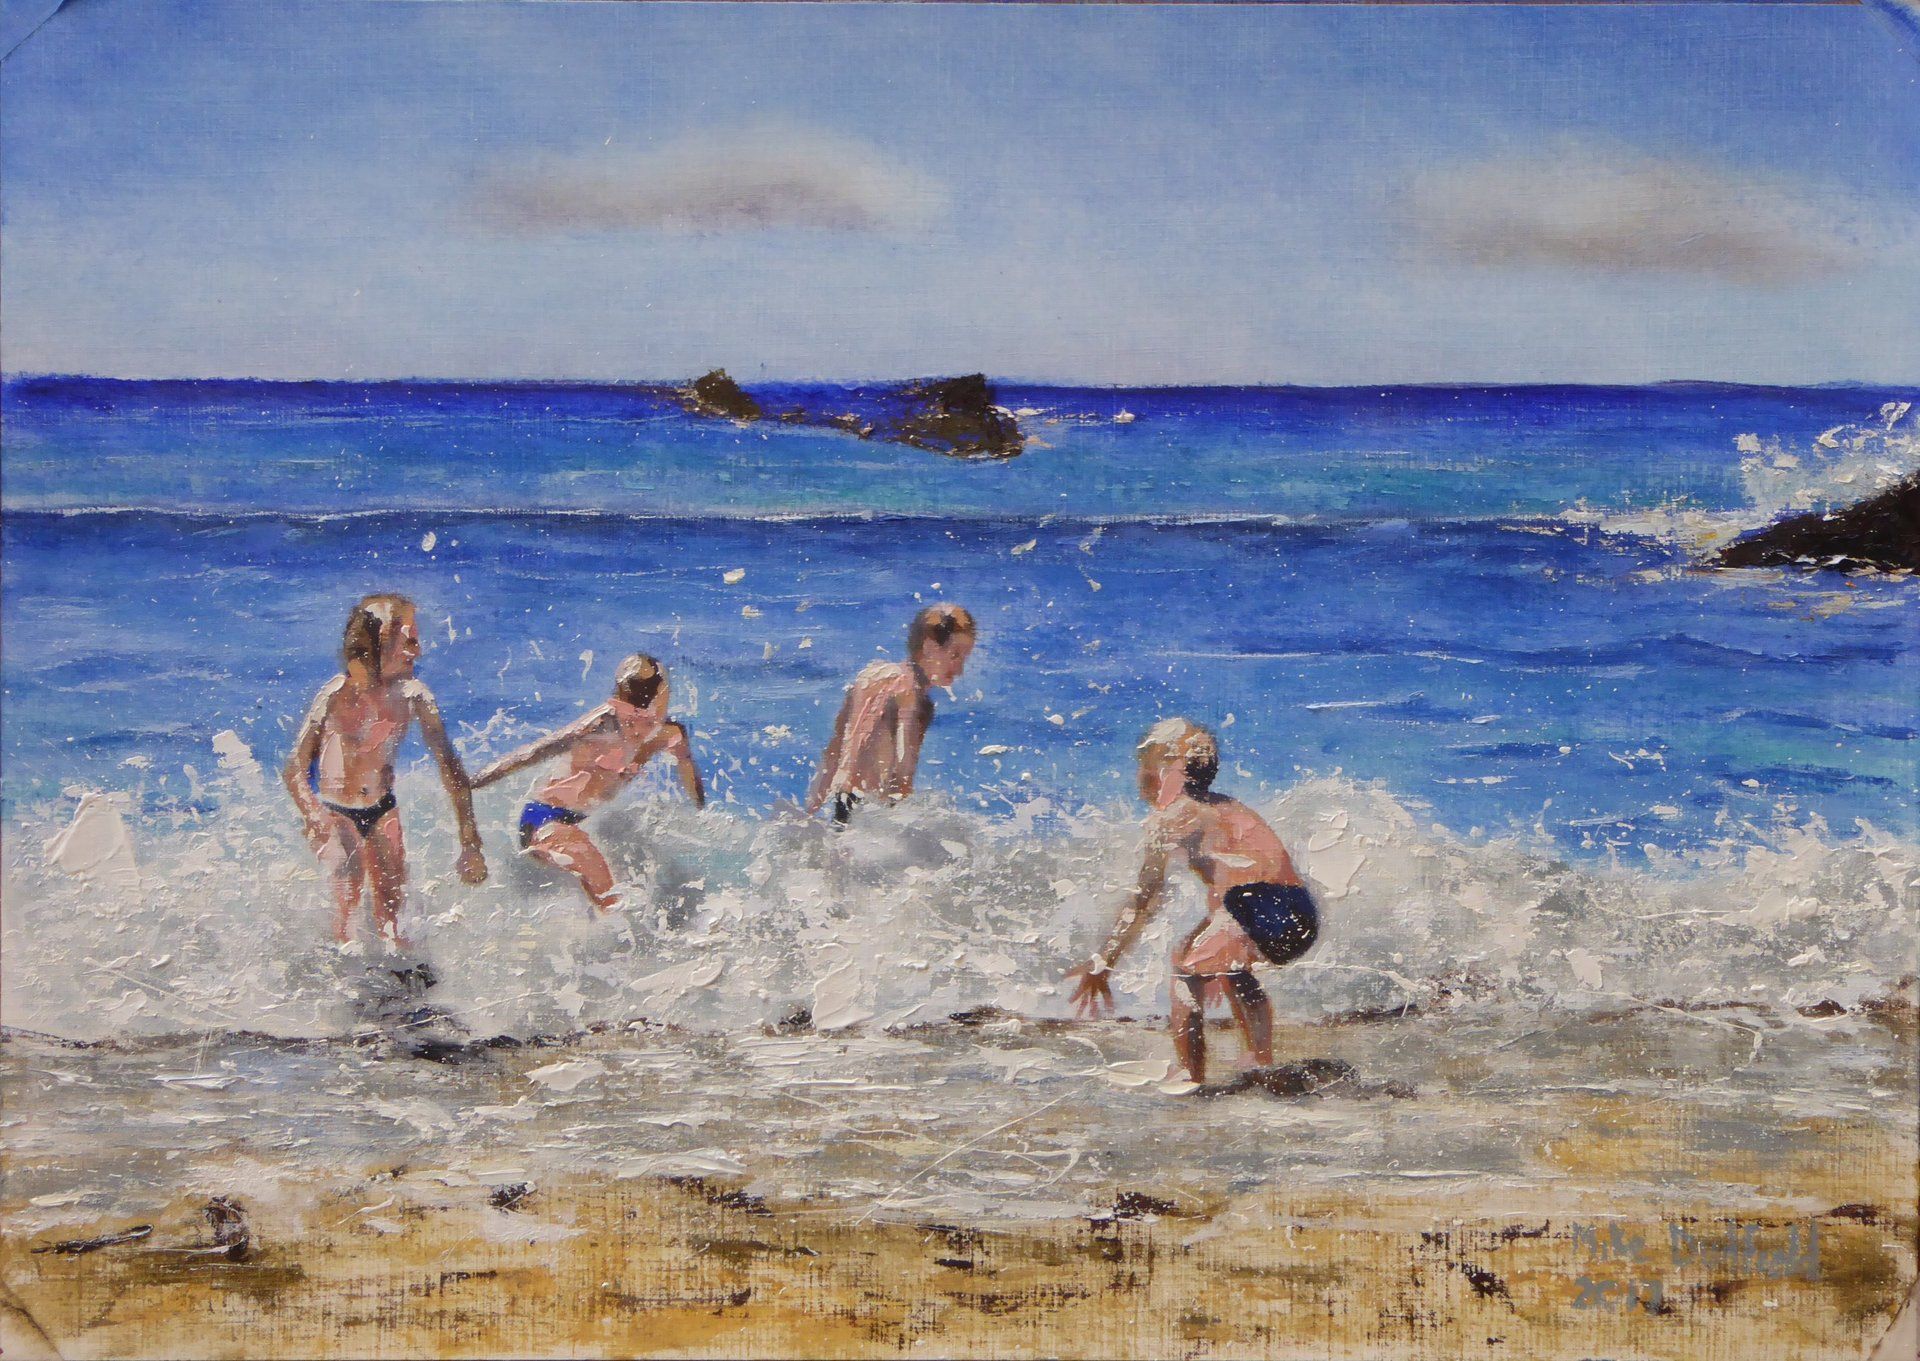 Painting of Boys Splashing in the Sea